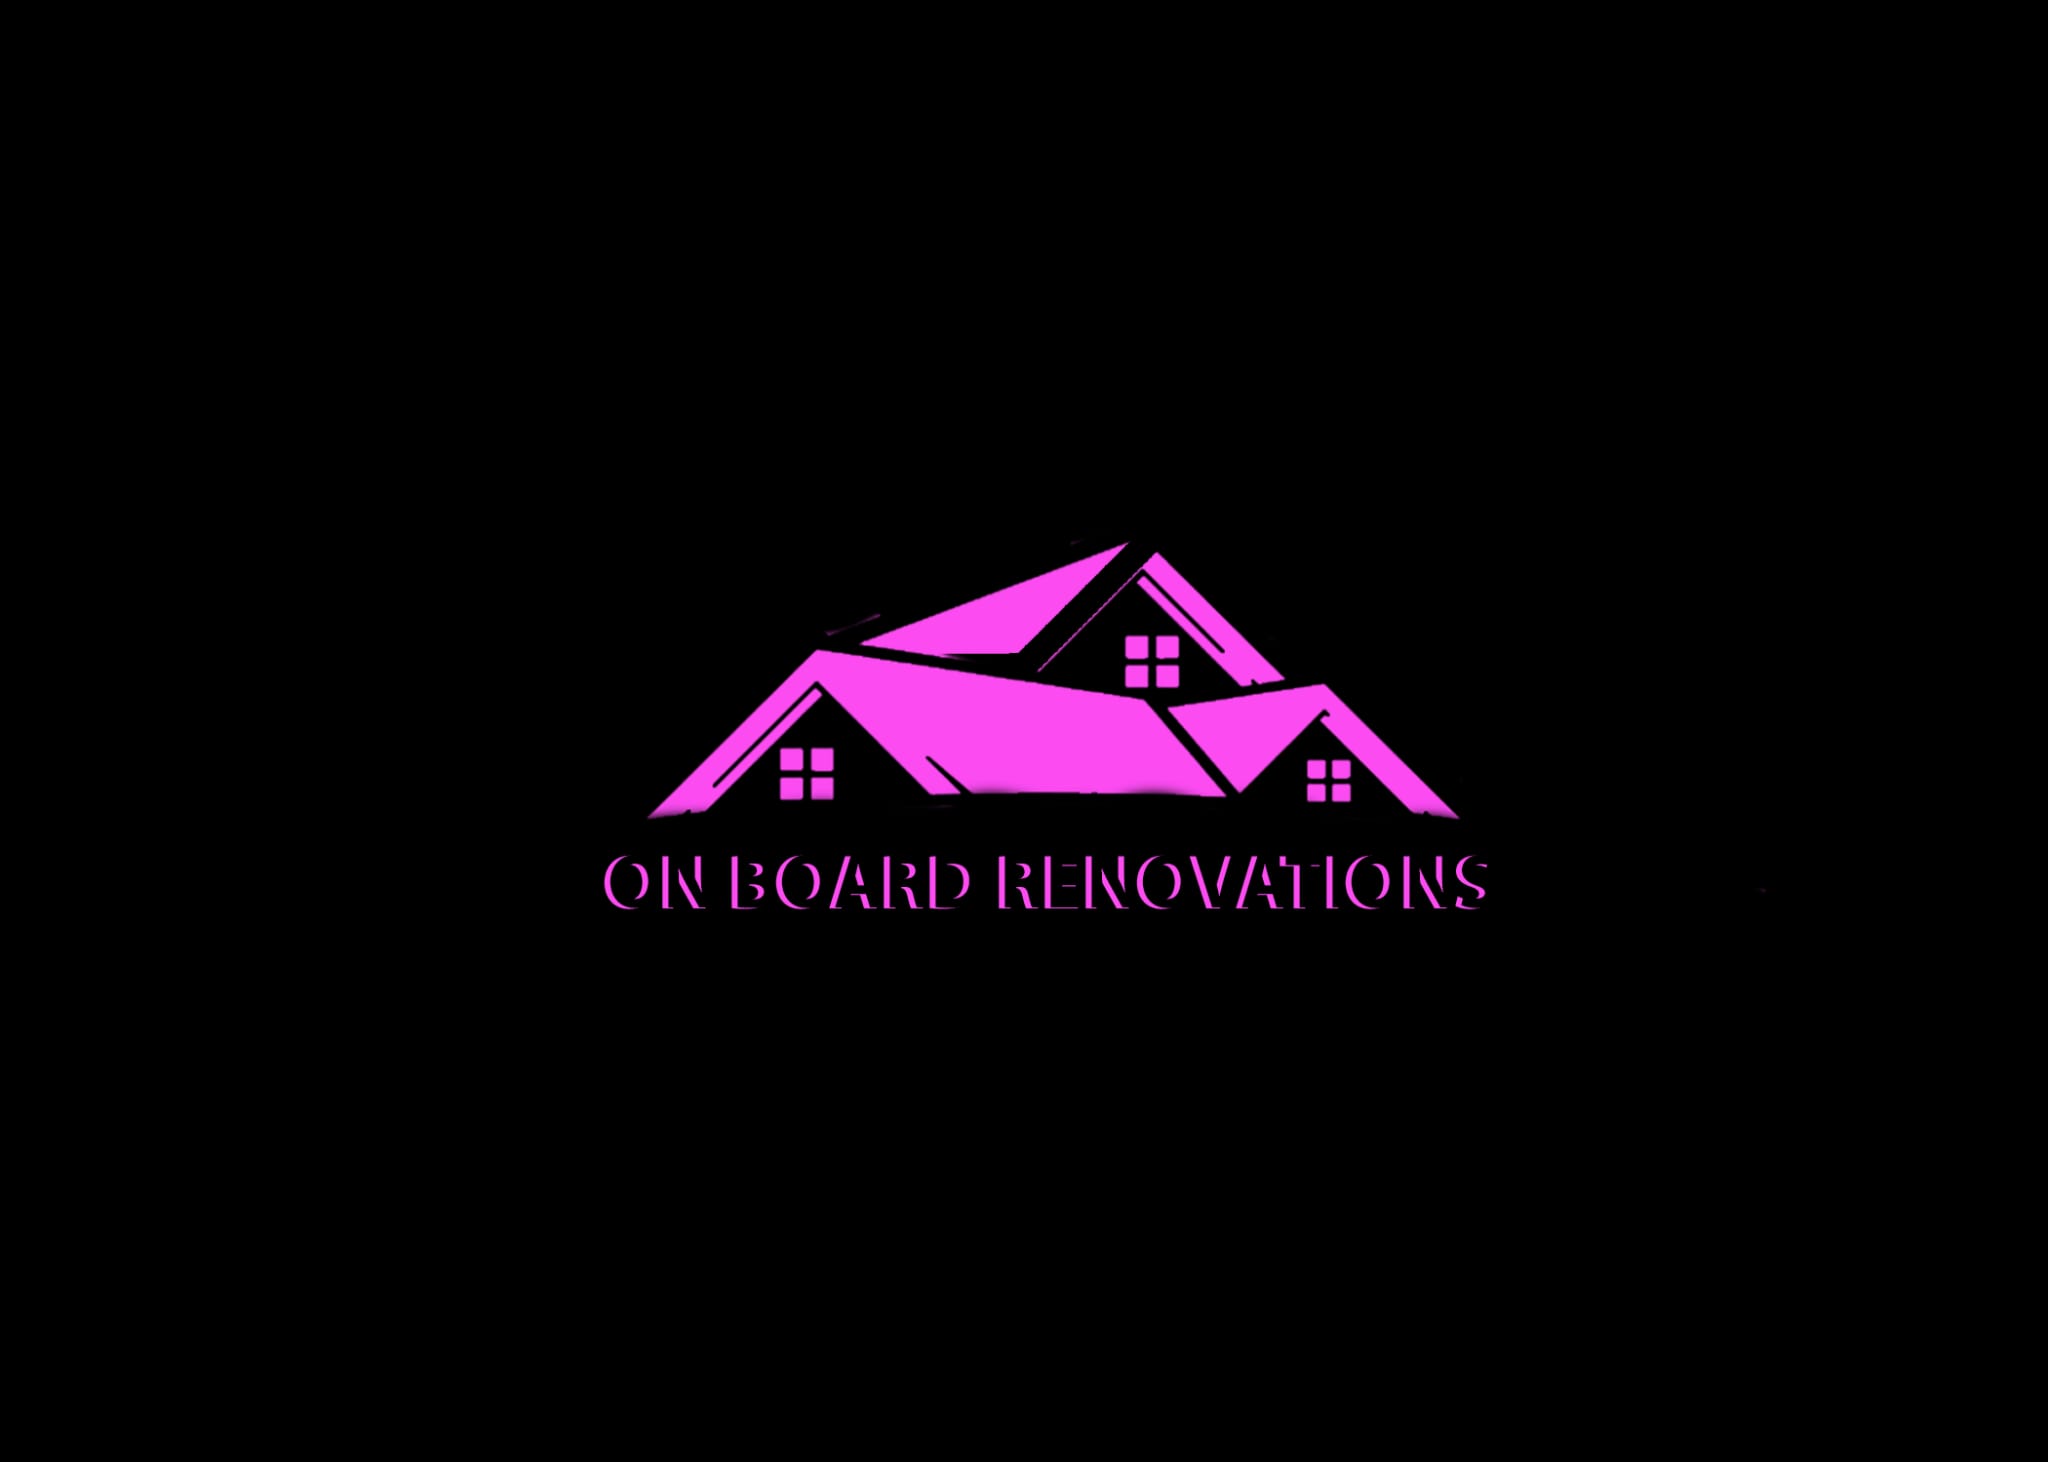 On Board Renovations's logo